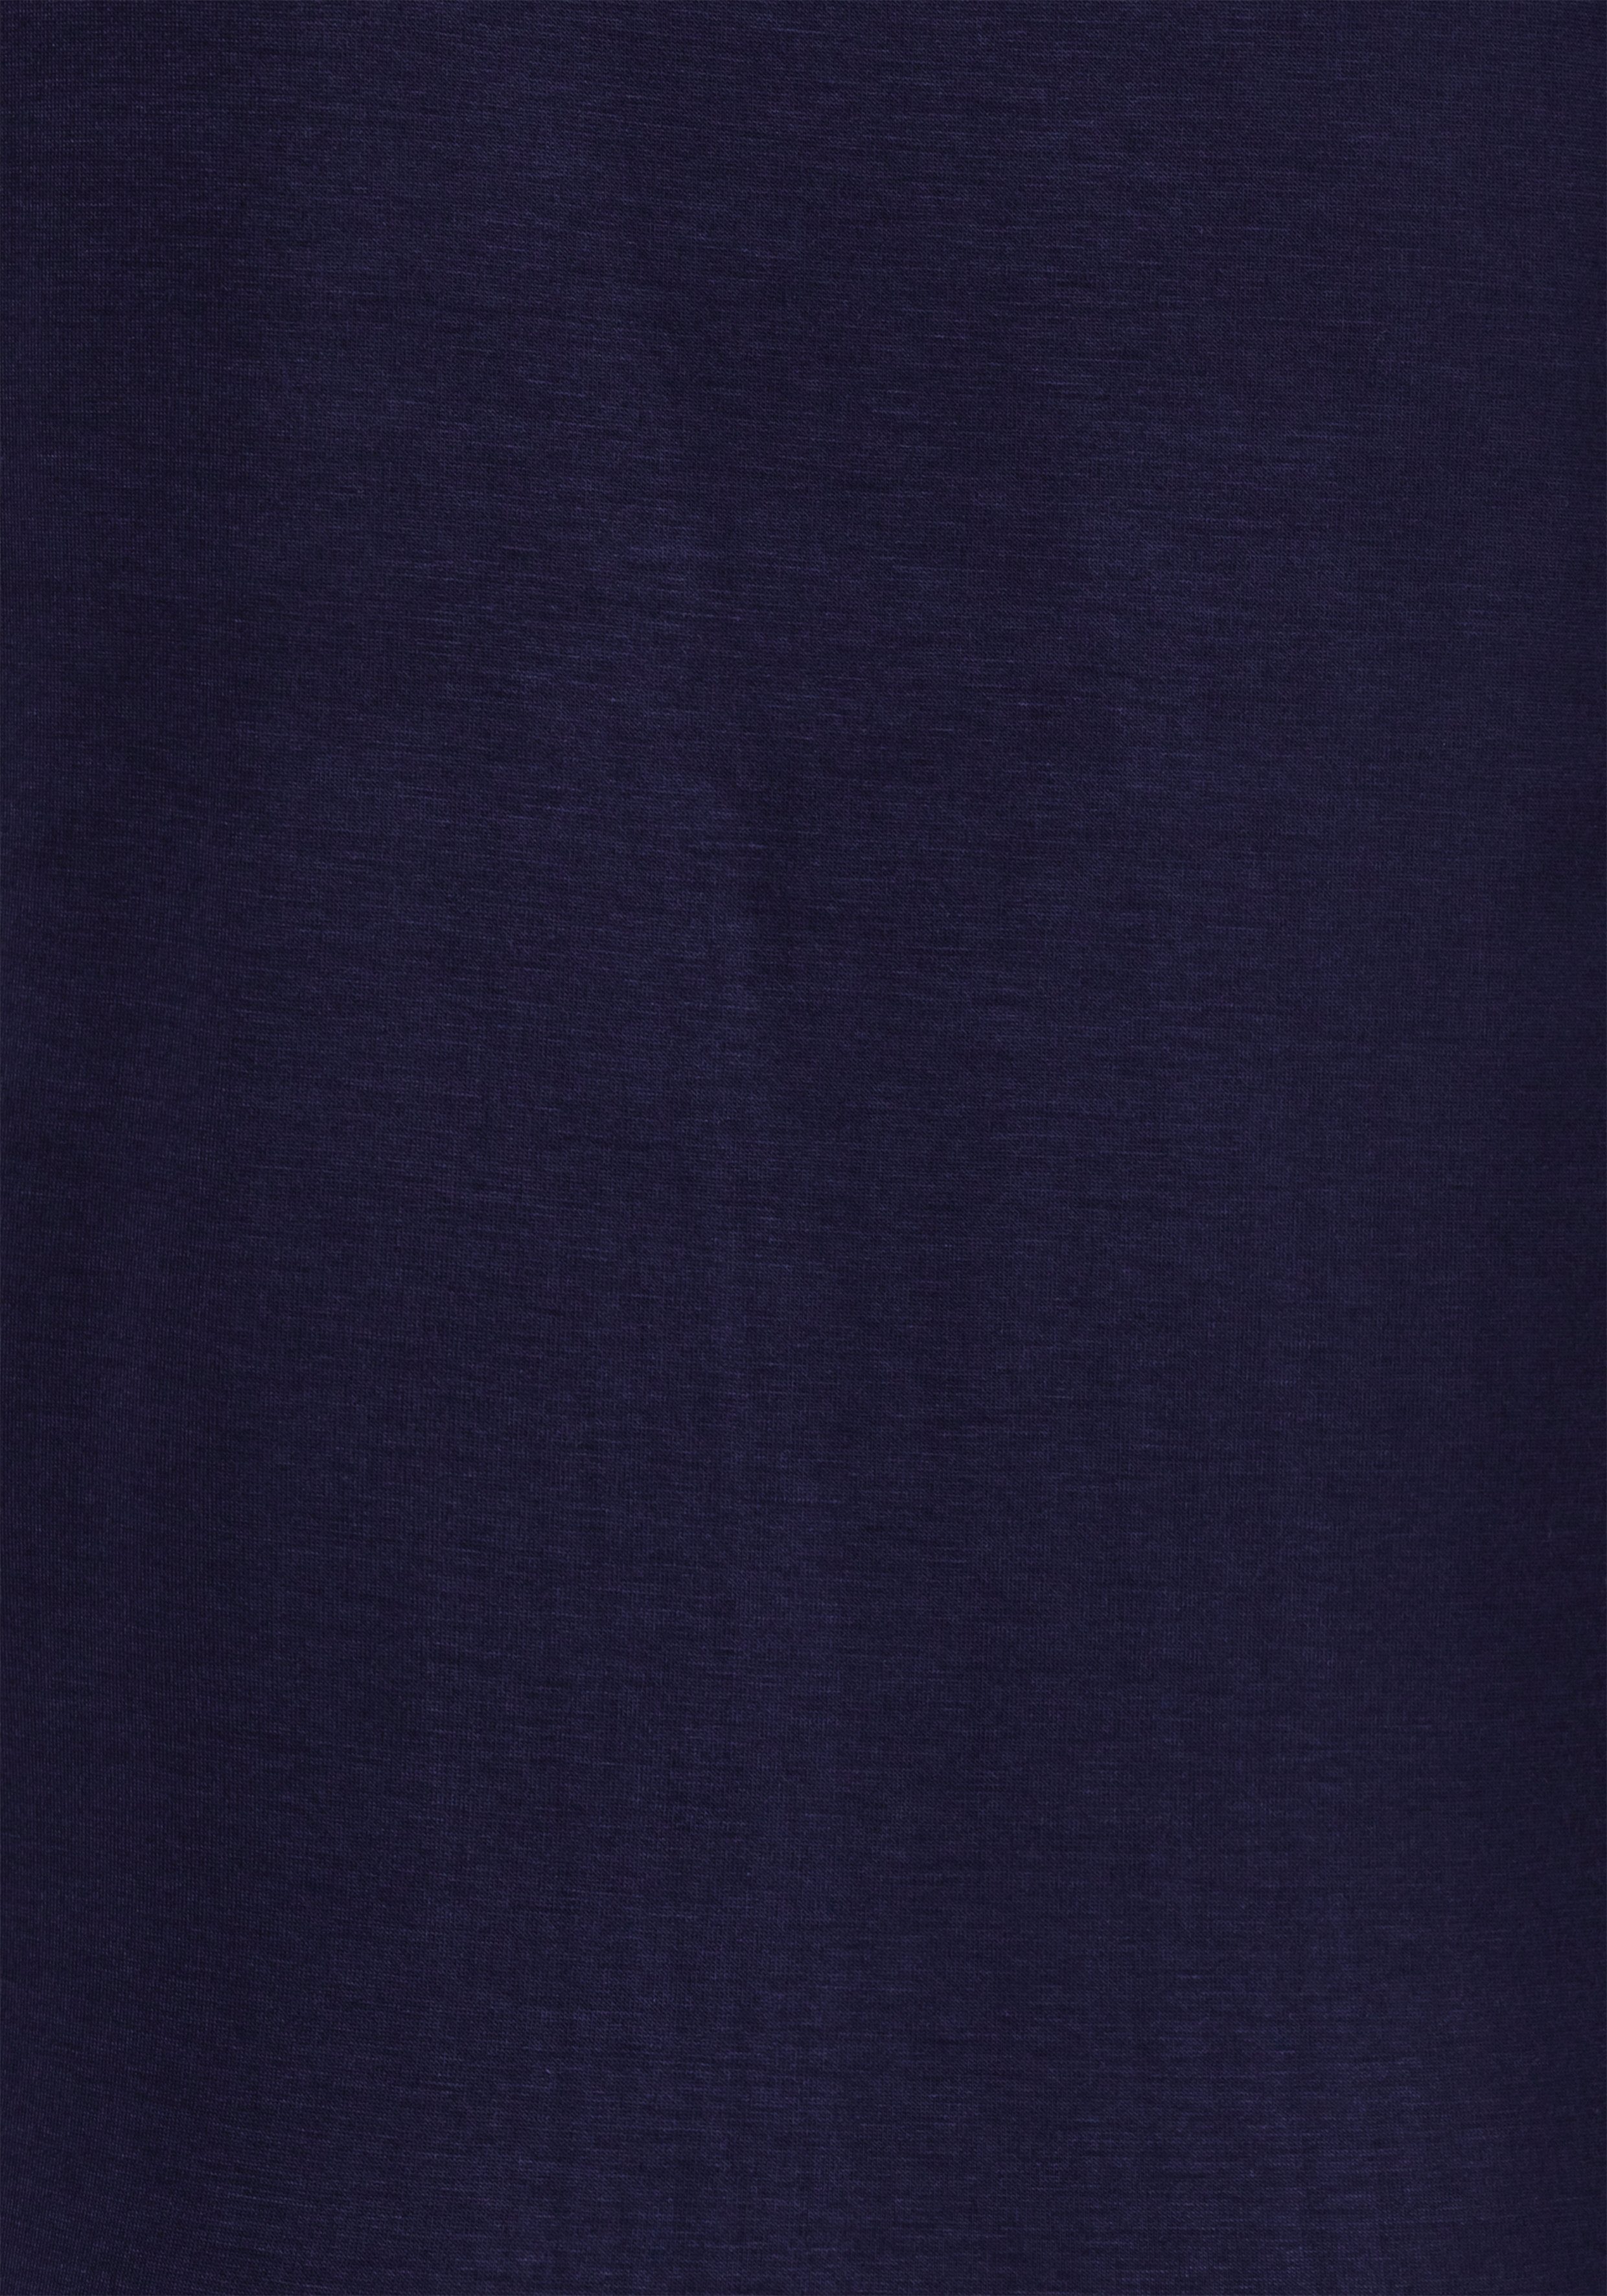 LASCANA T-Shirt mit angeschnittenem Arm dunkelblau